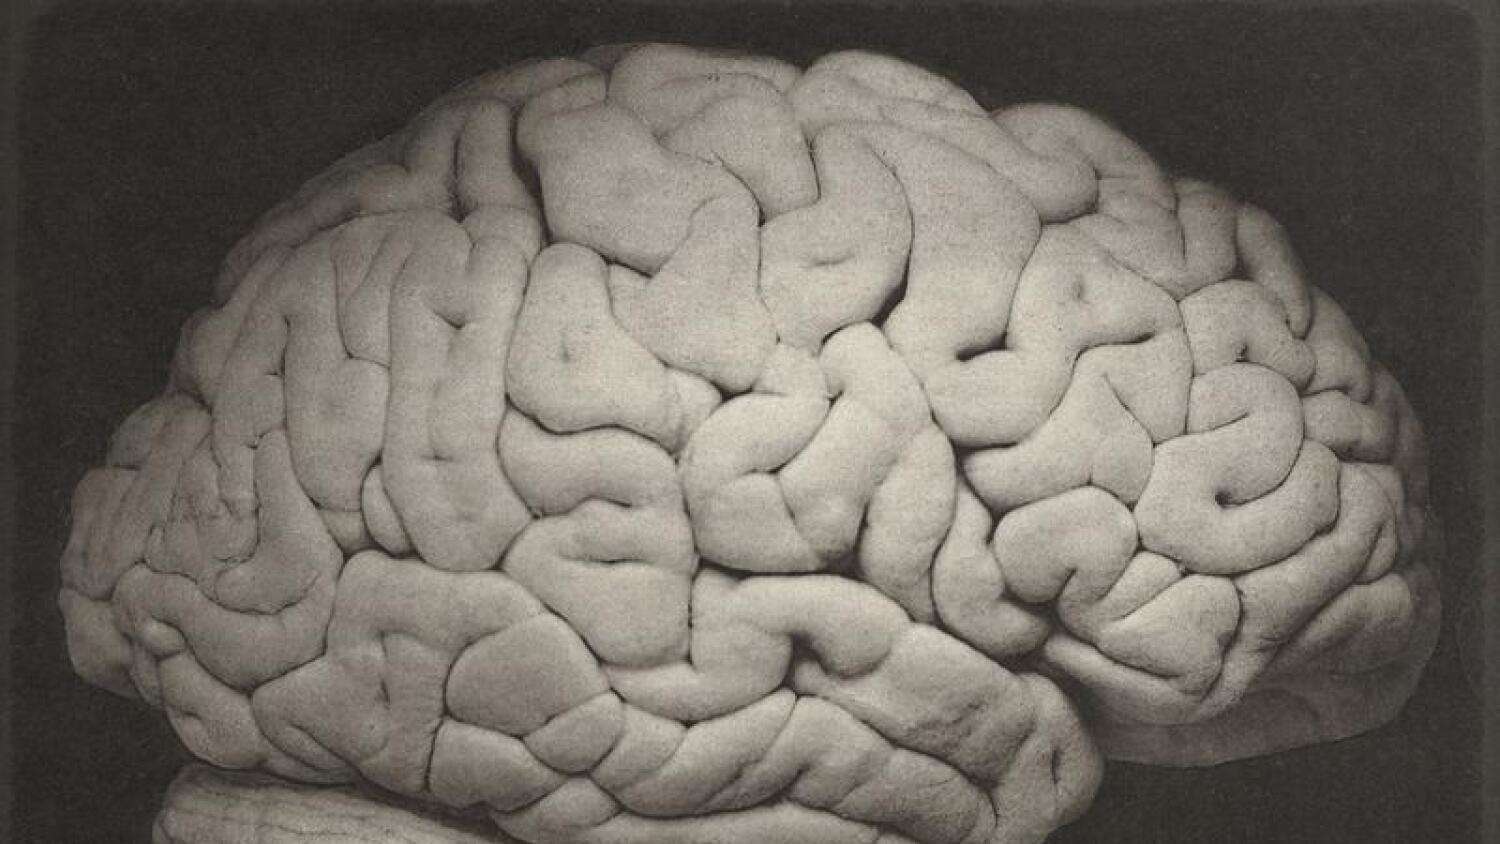 Large brain. Огромные мозги человека.